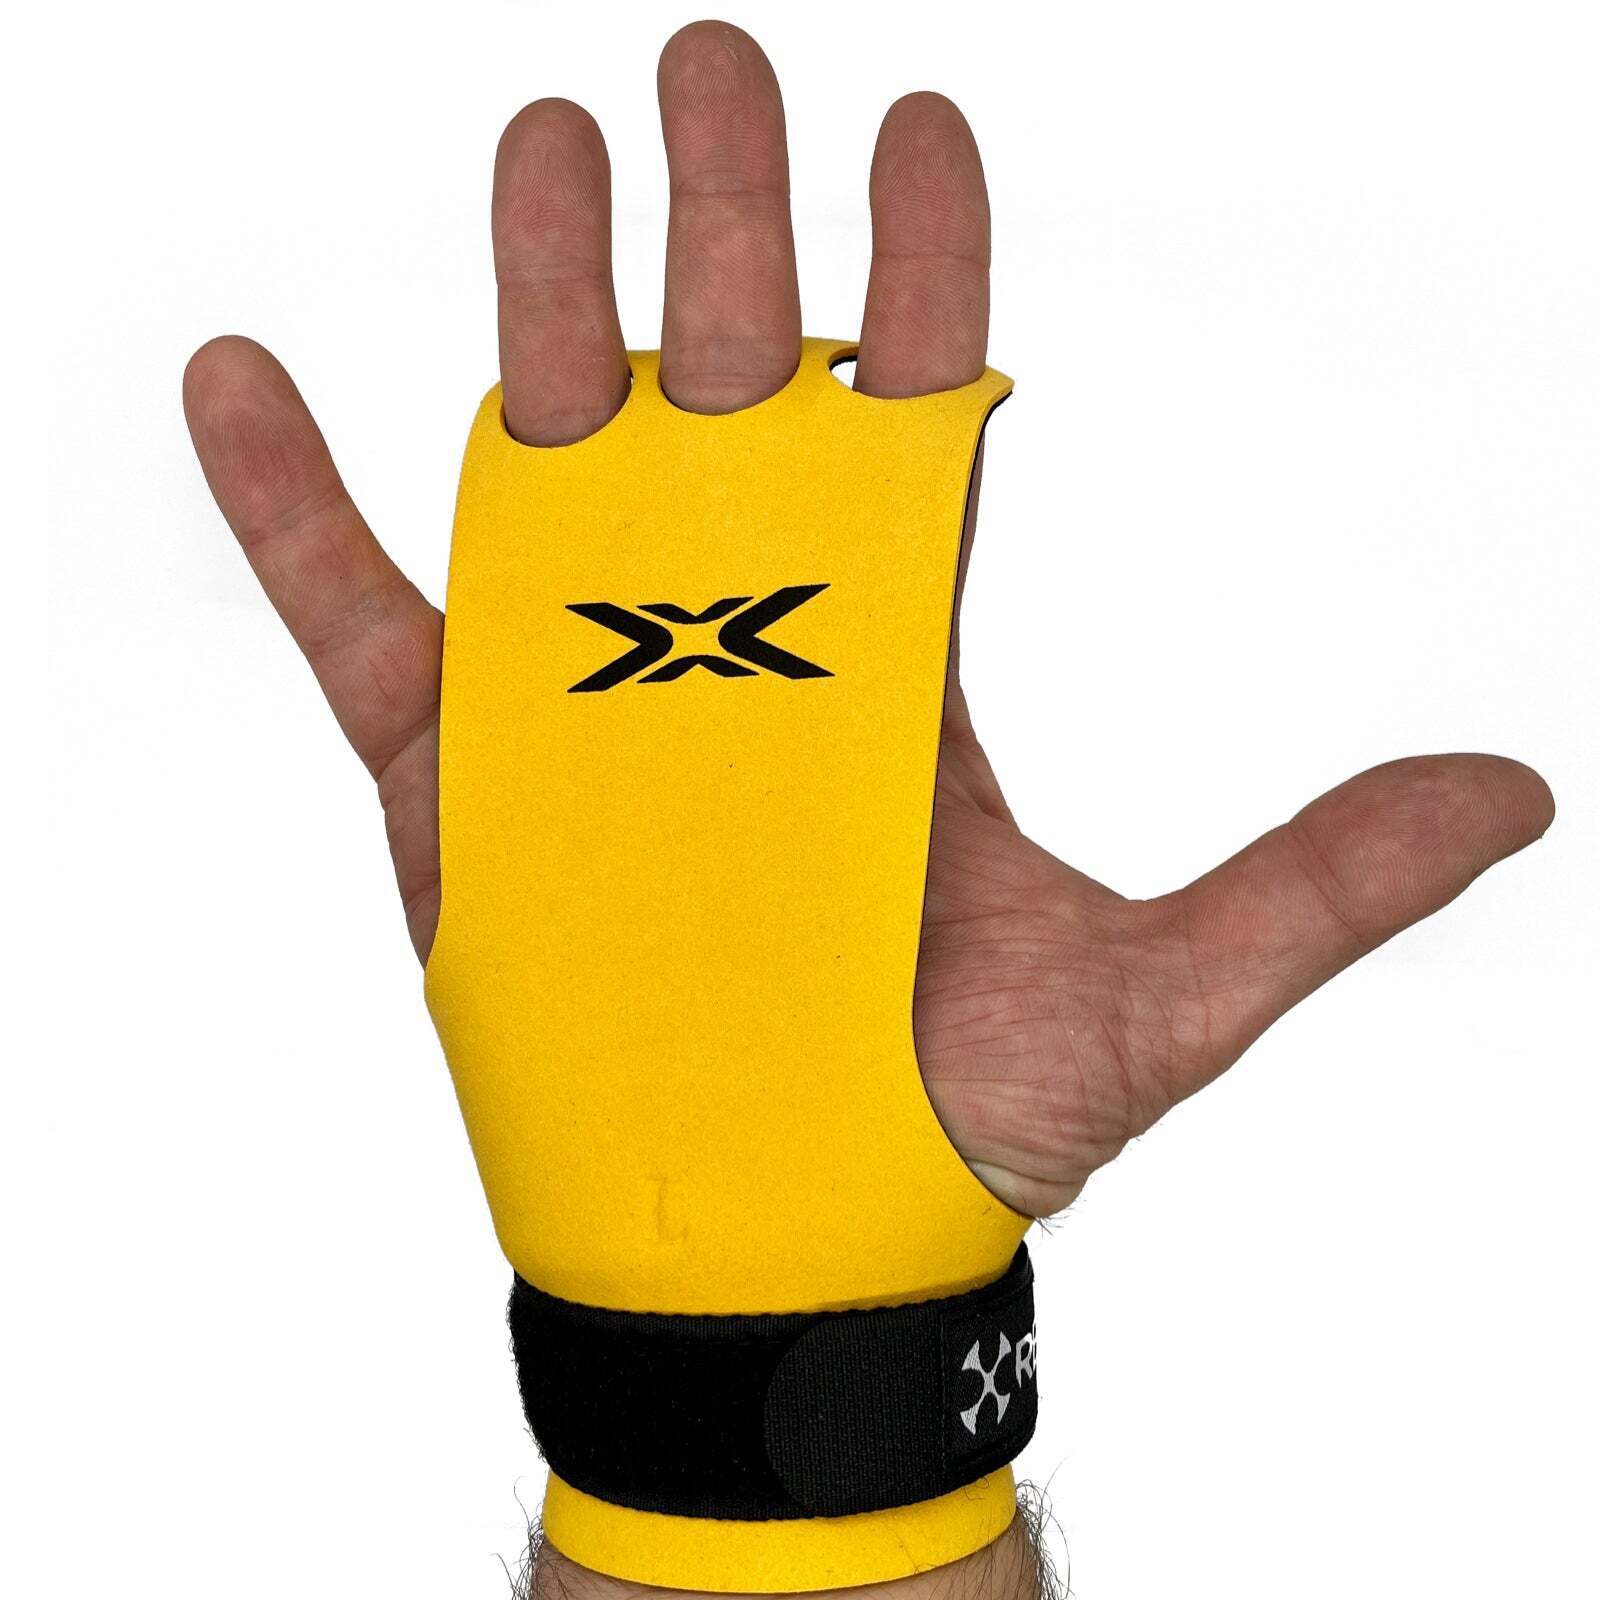 Gloves for Crossfit